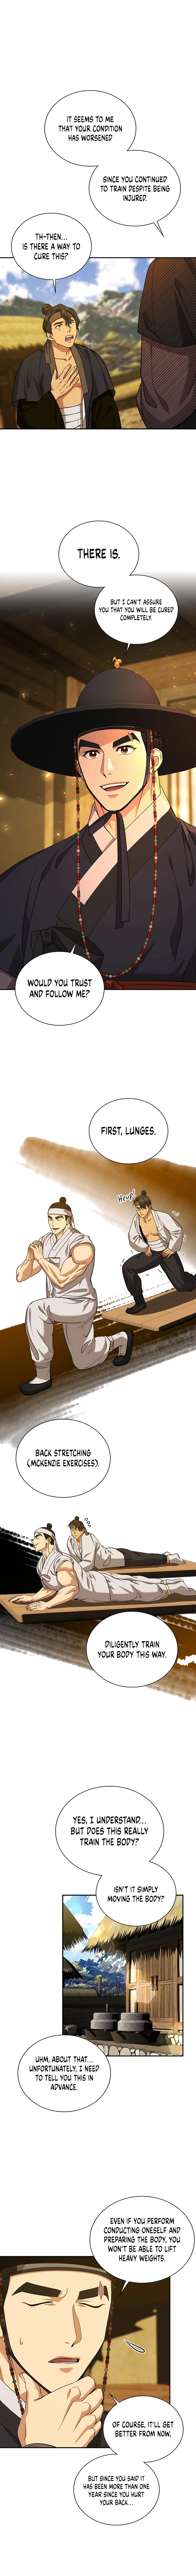 Muscle Joseon, Chapter 16 image 08